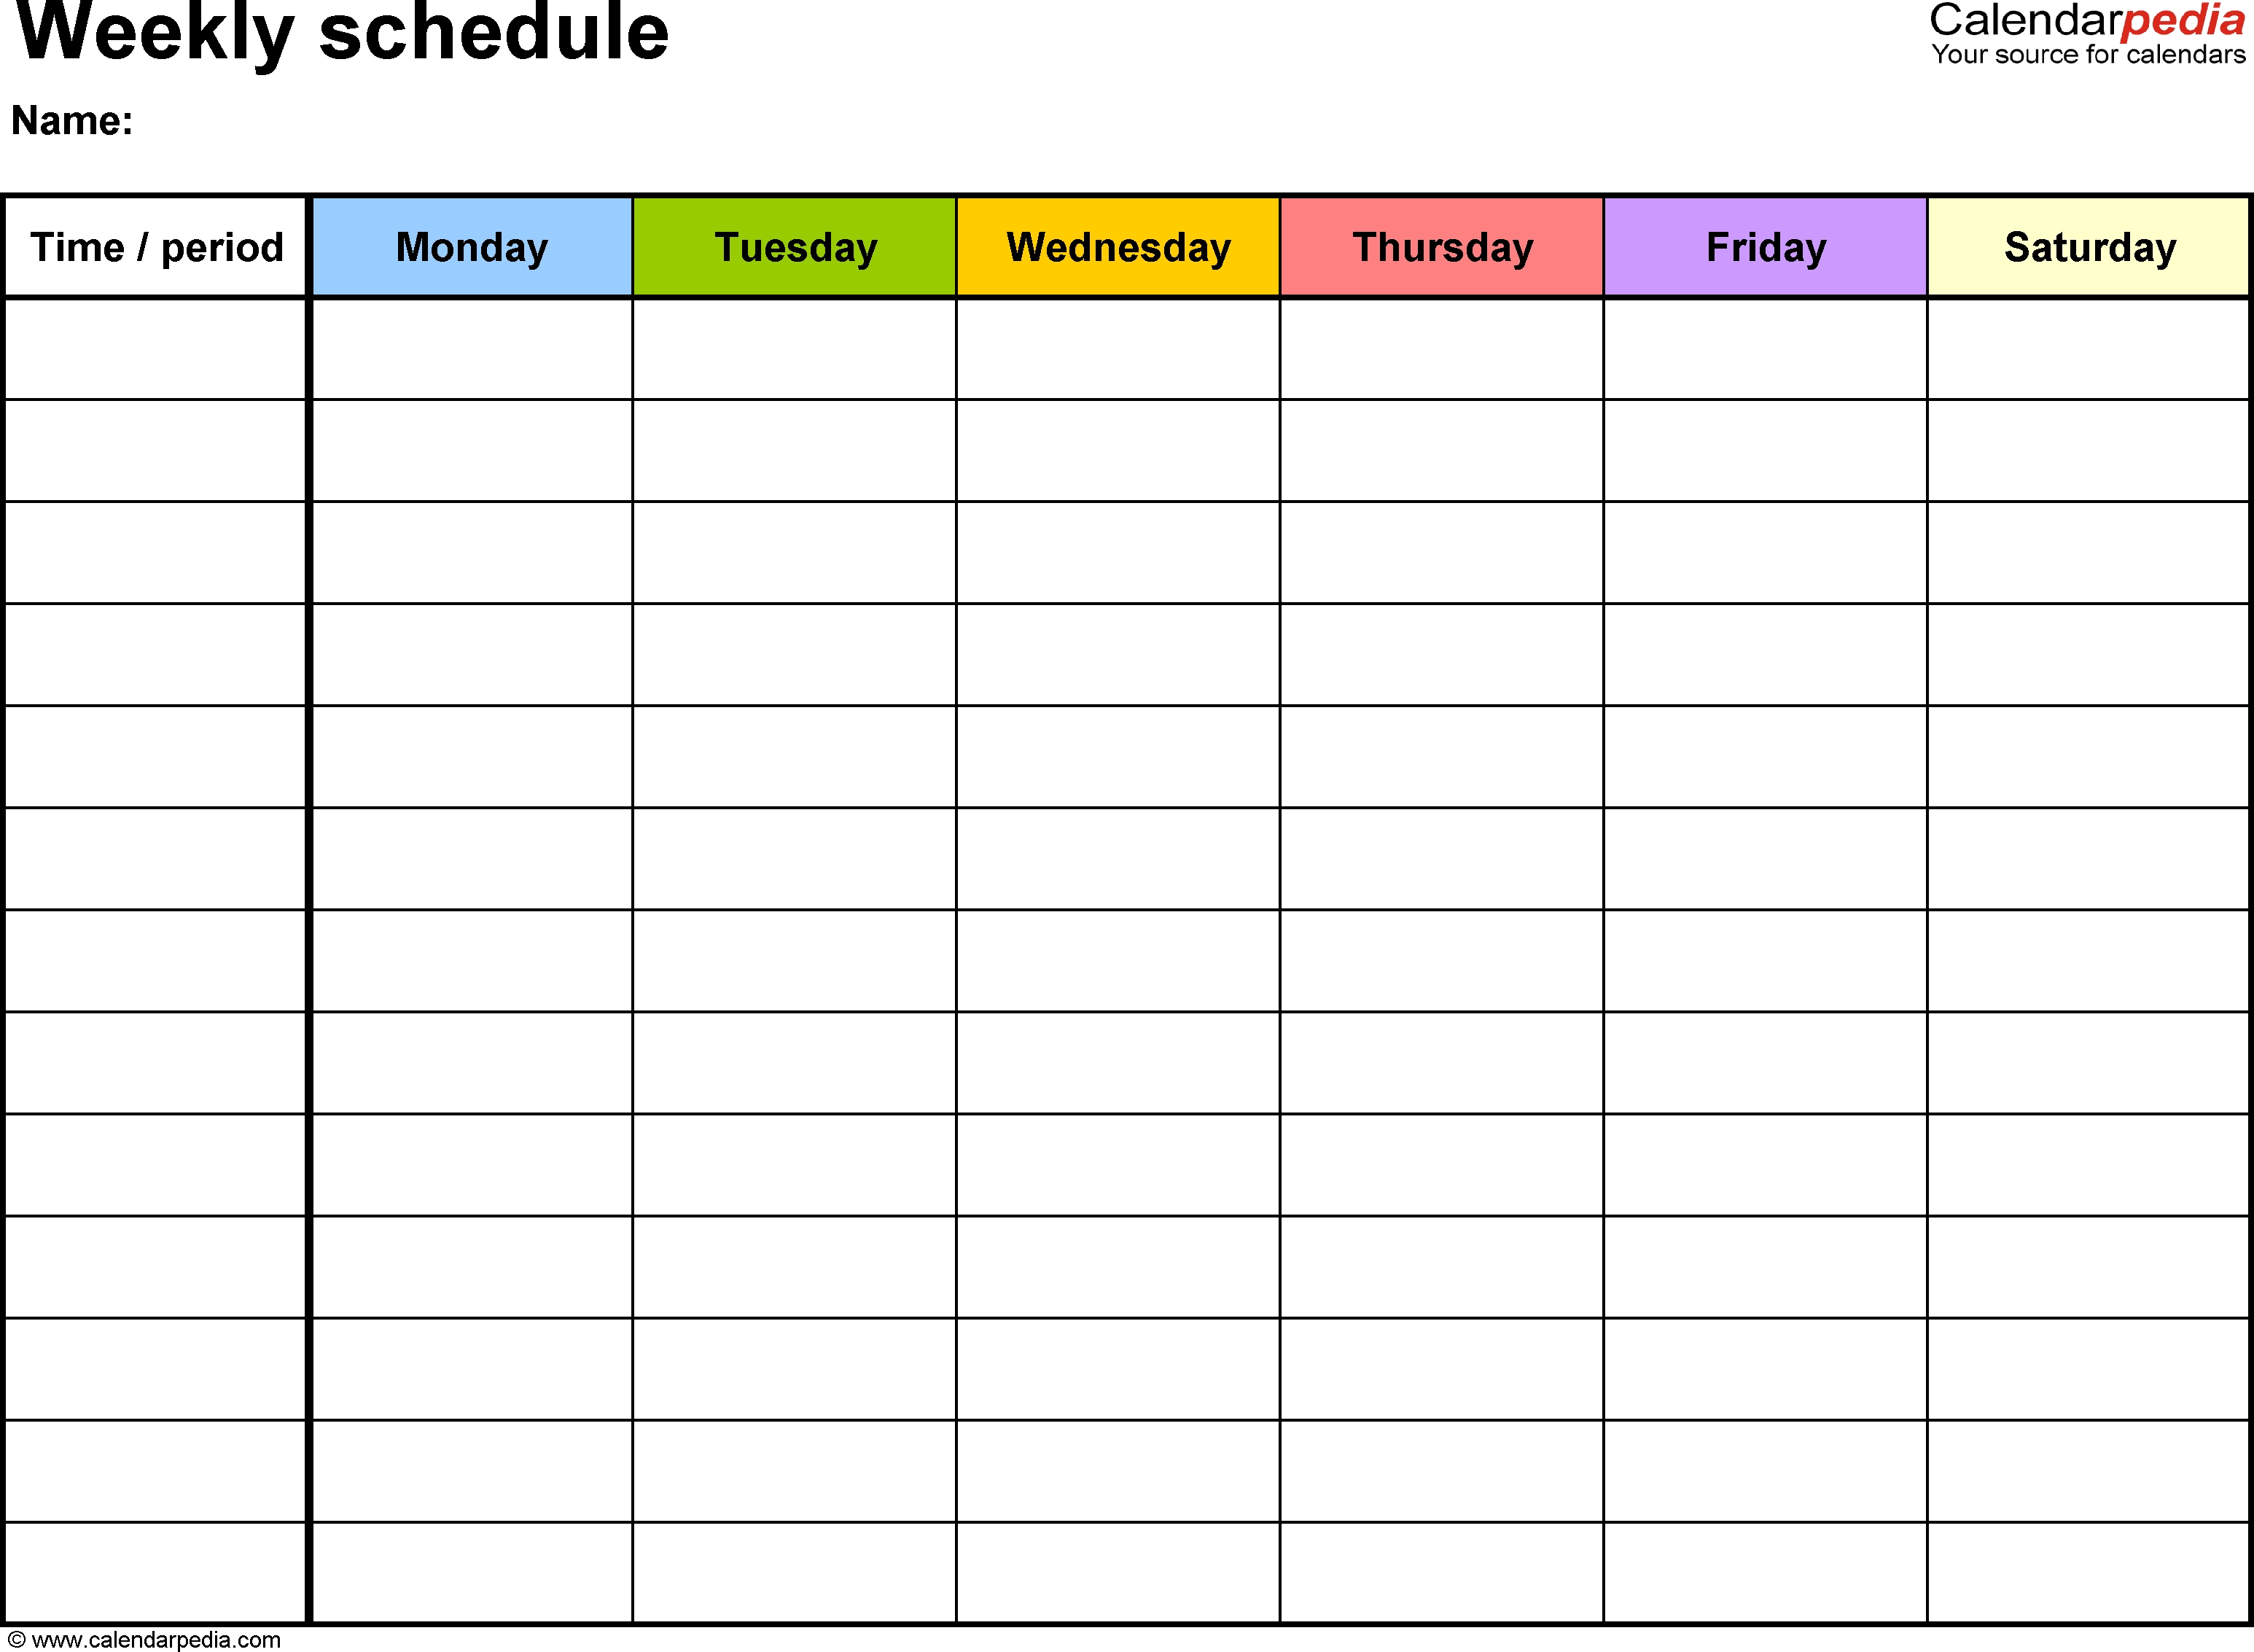 Free Weekly Schedule Templates For Word - 18 Templates Blank Six Week Calendar Printable